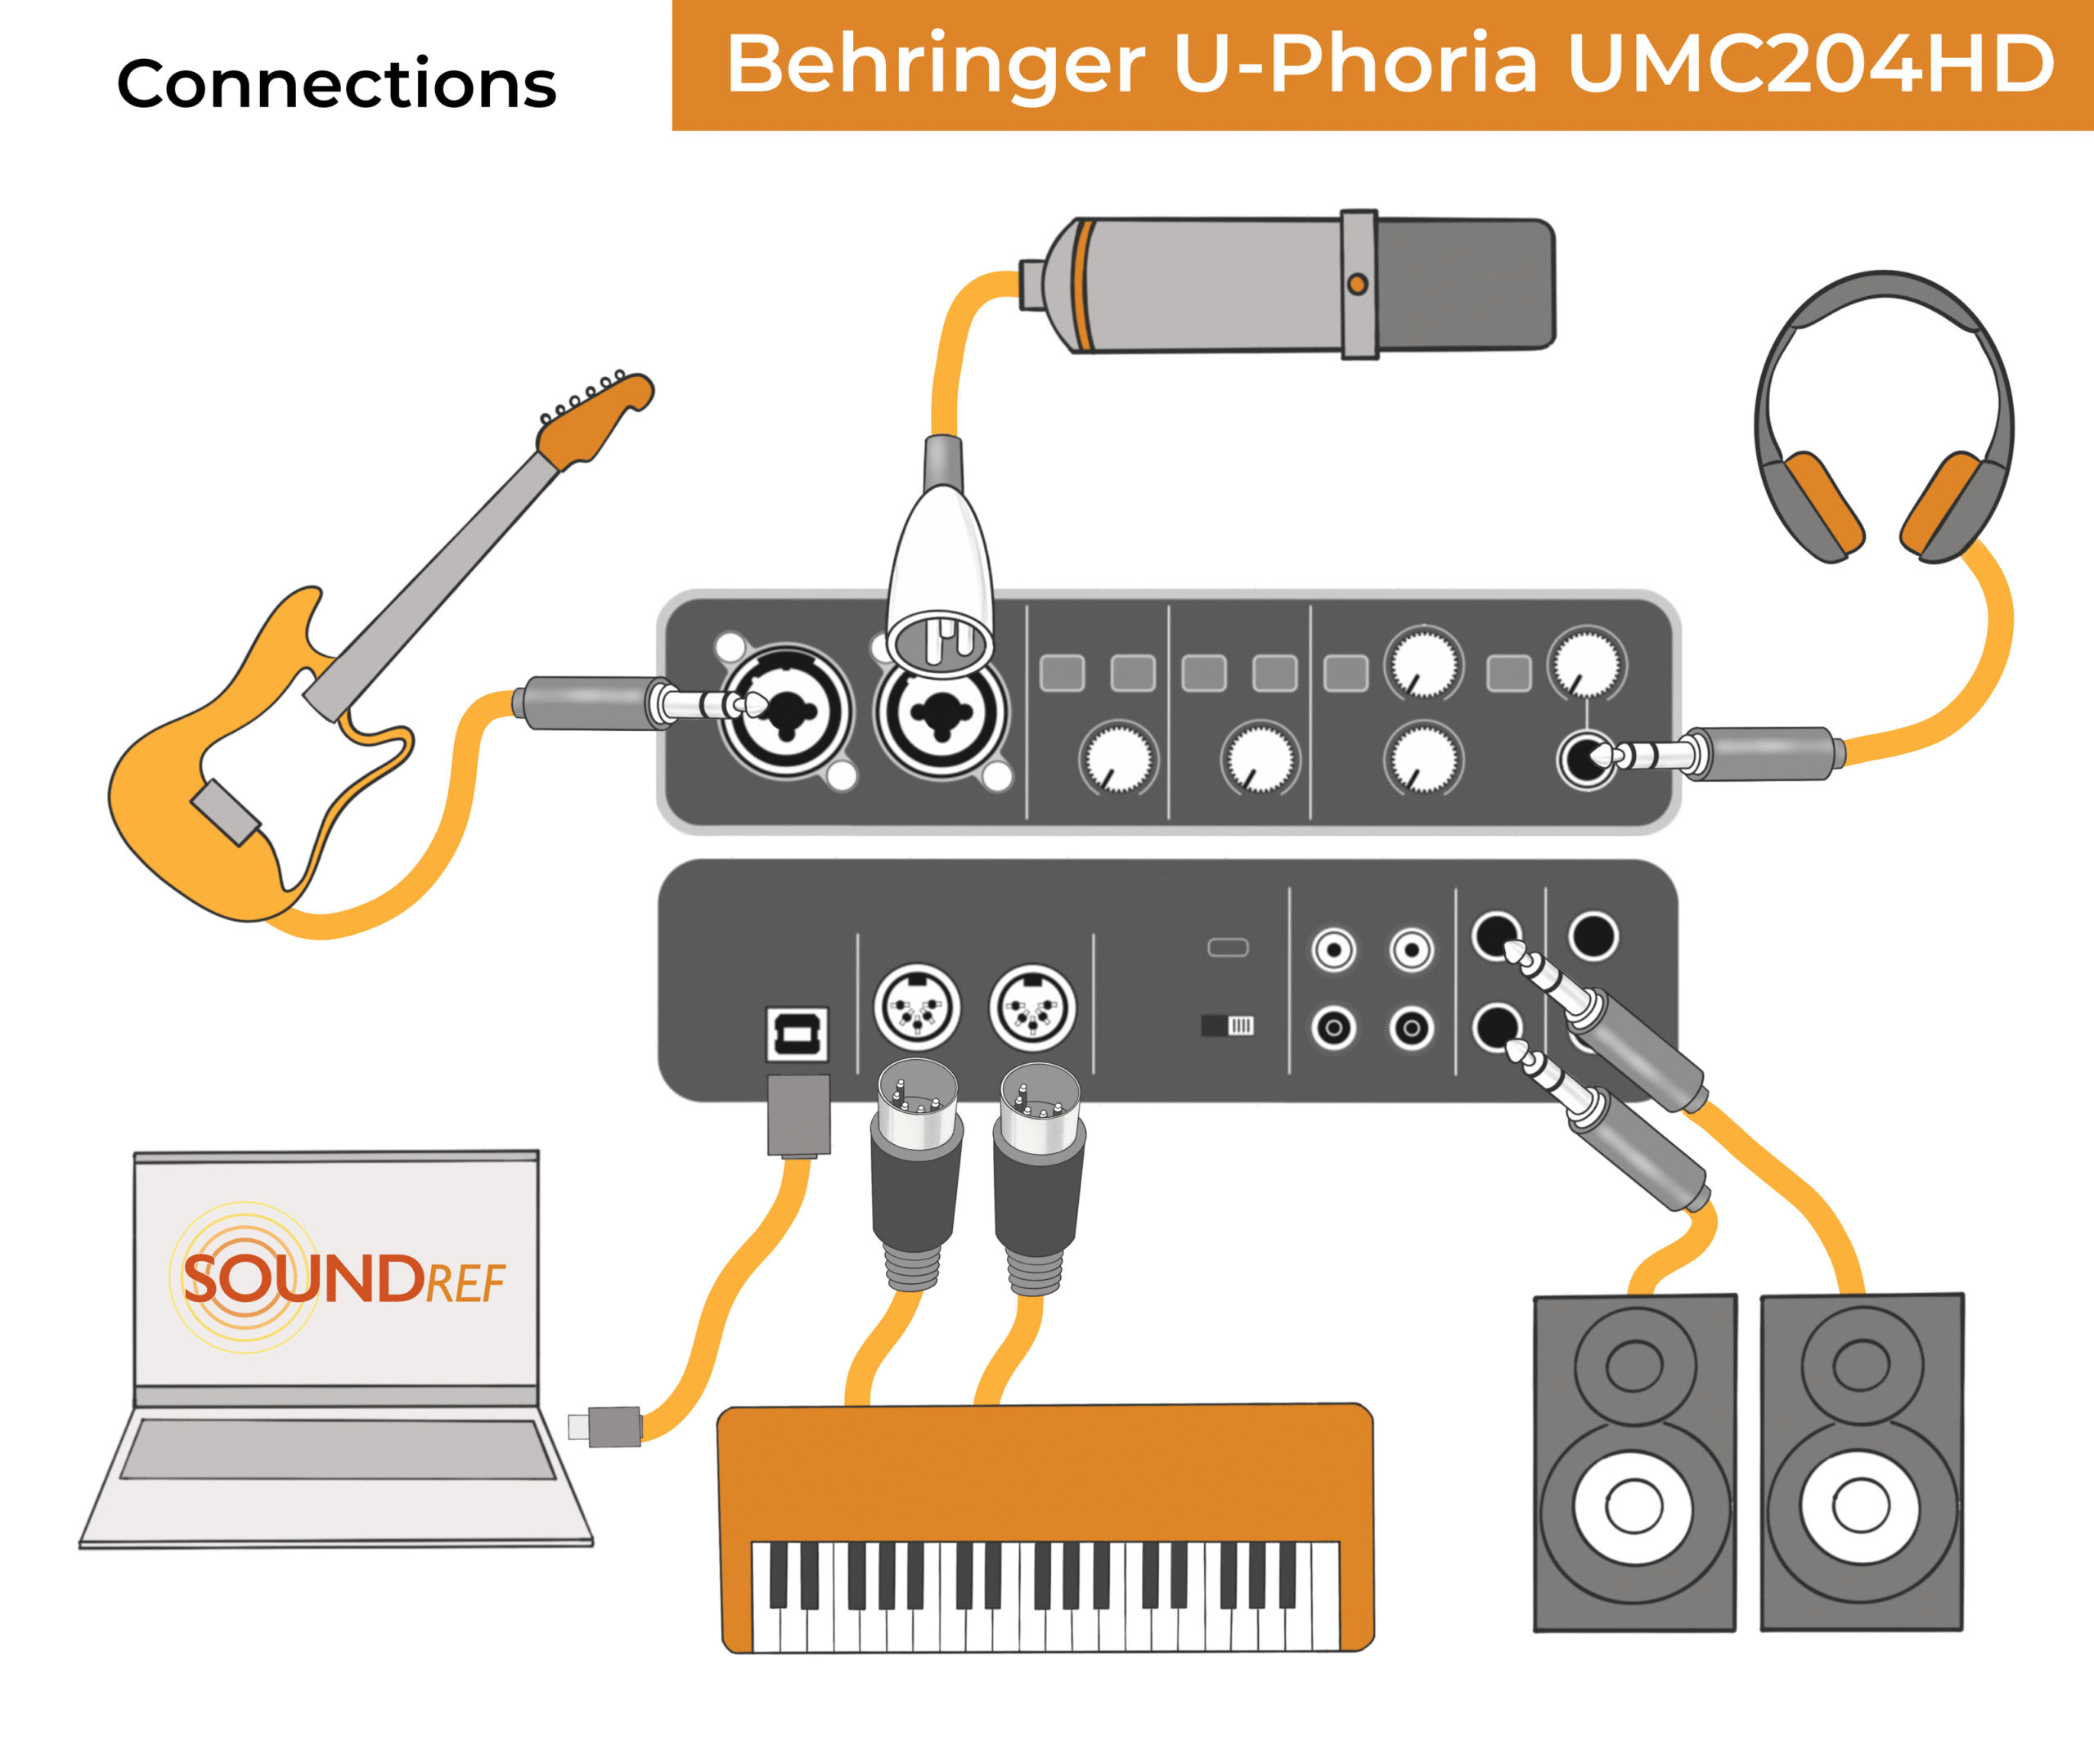 Connecting a Behringer U-Phoria UMC204HD